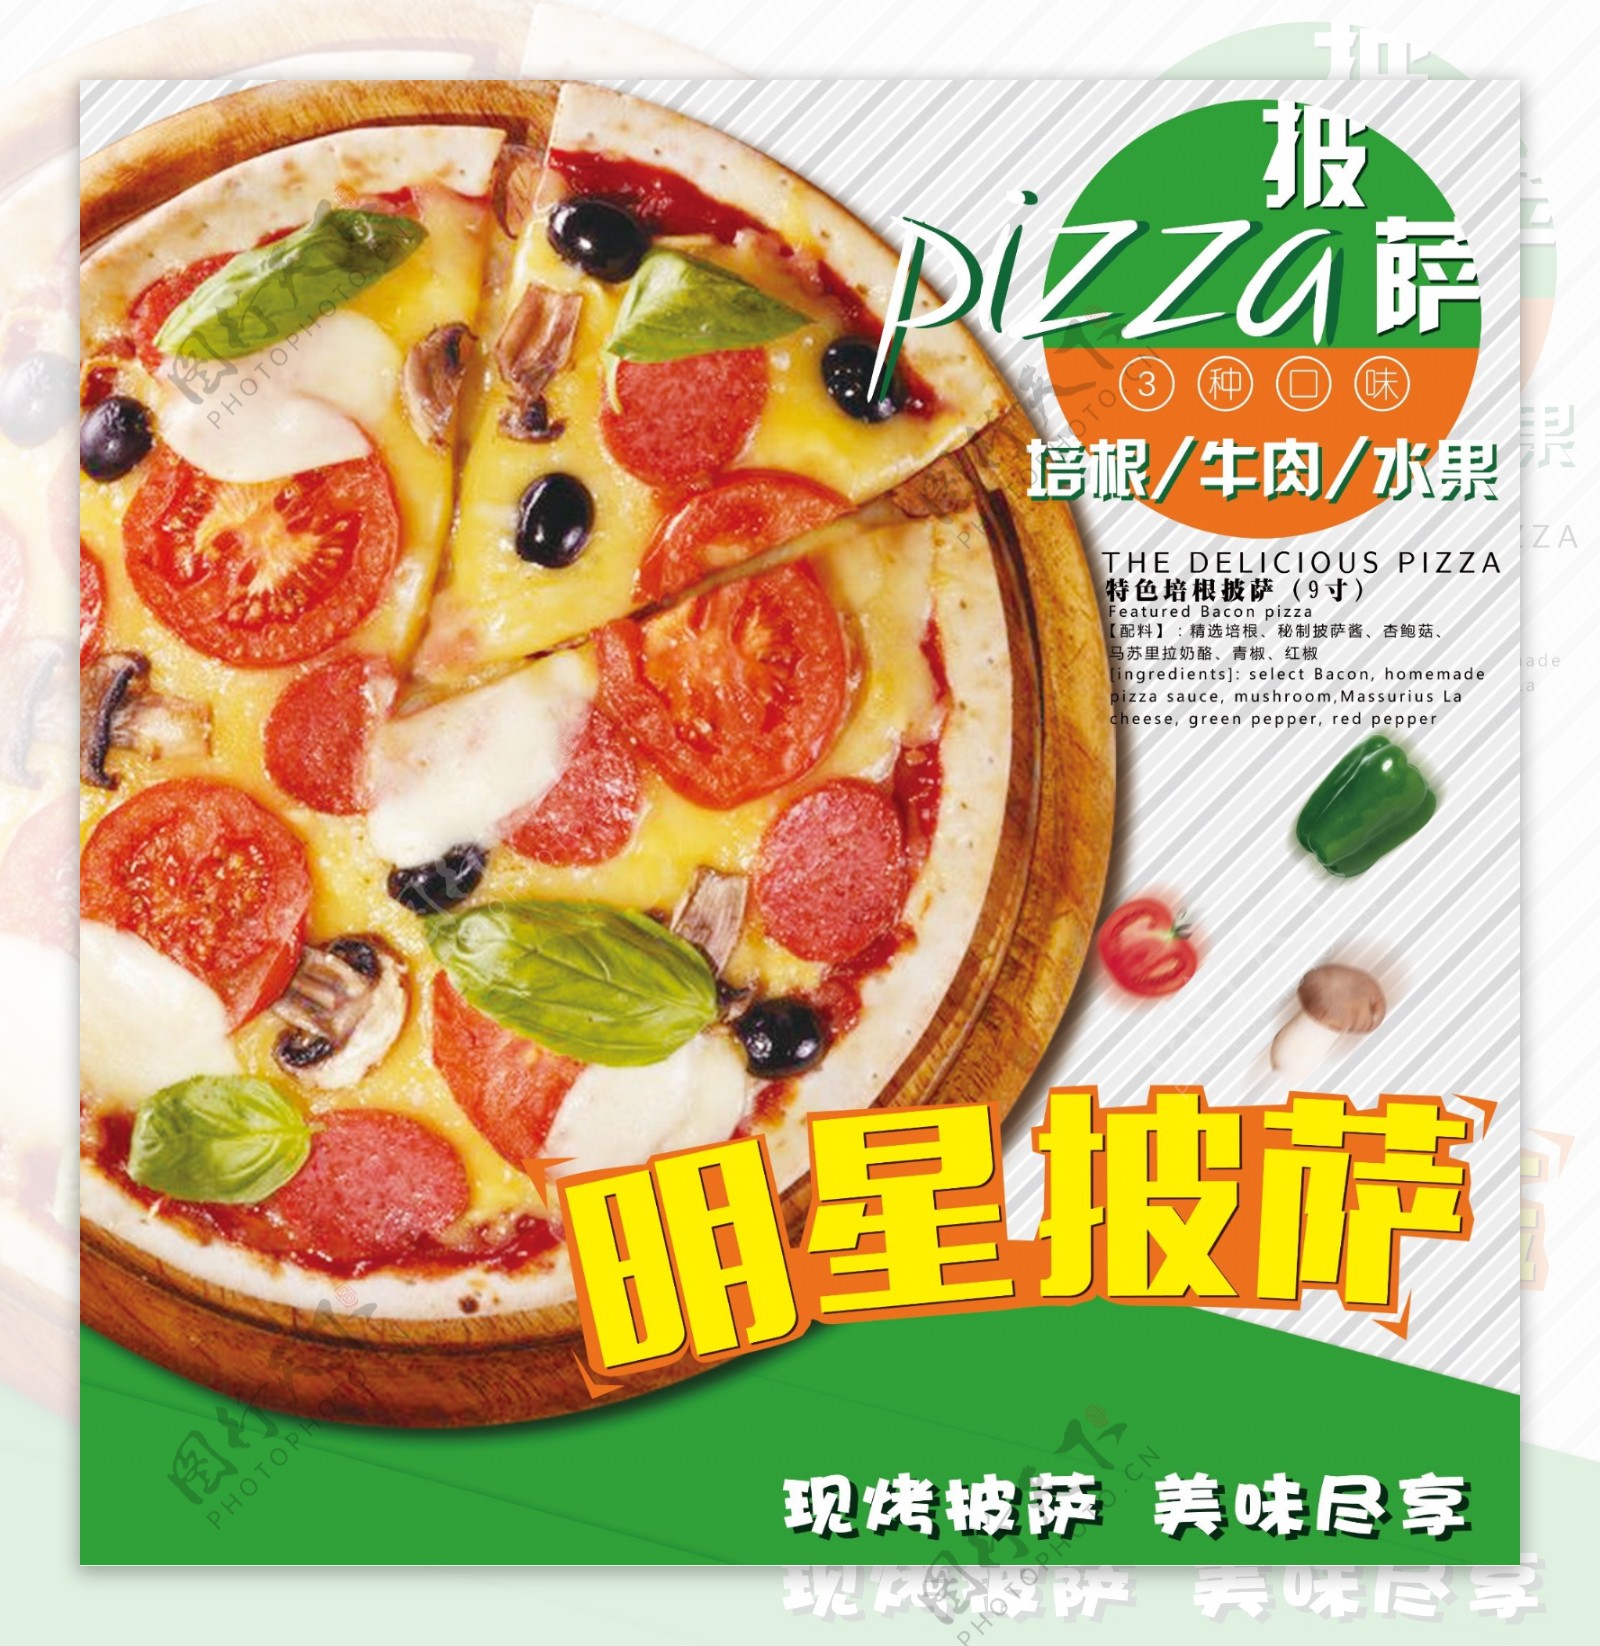 pizza披萨海报招贴